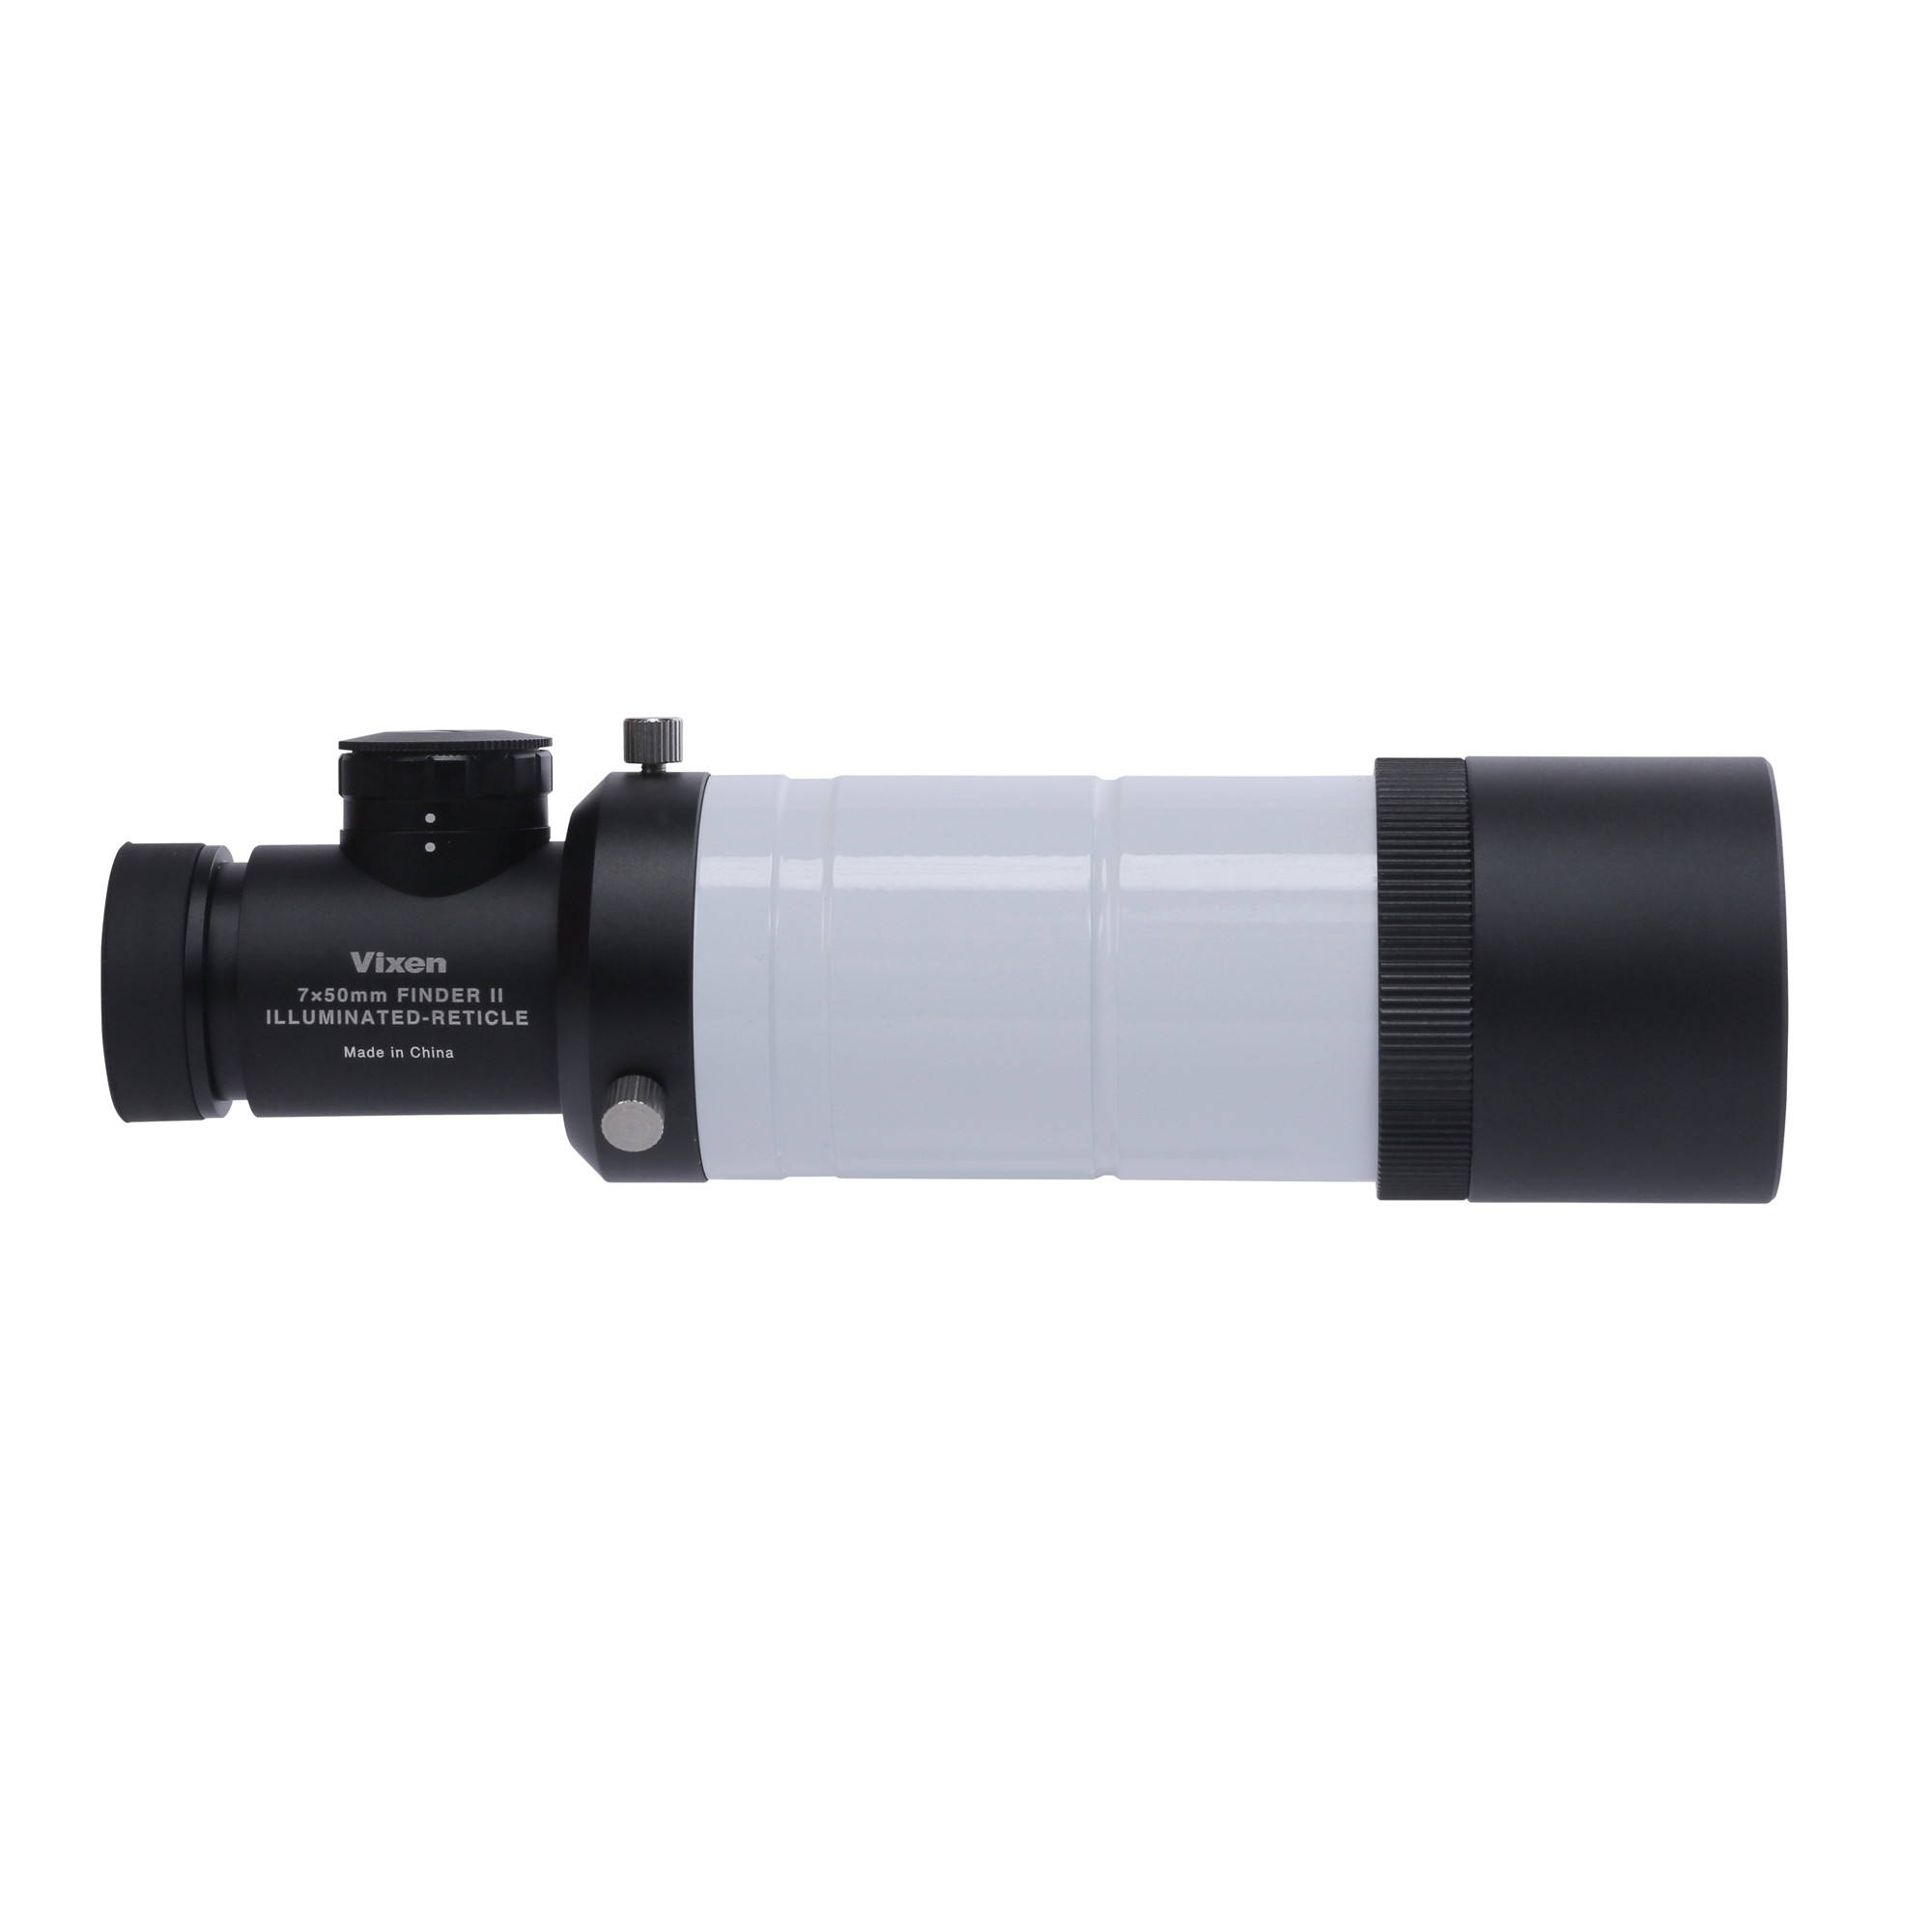 Vixen finder scope 7x50 with crosshairs and illumination